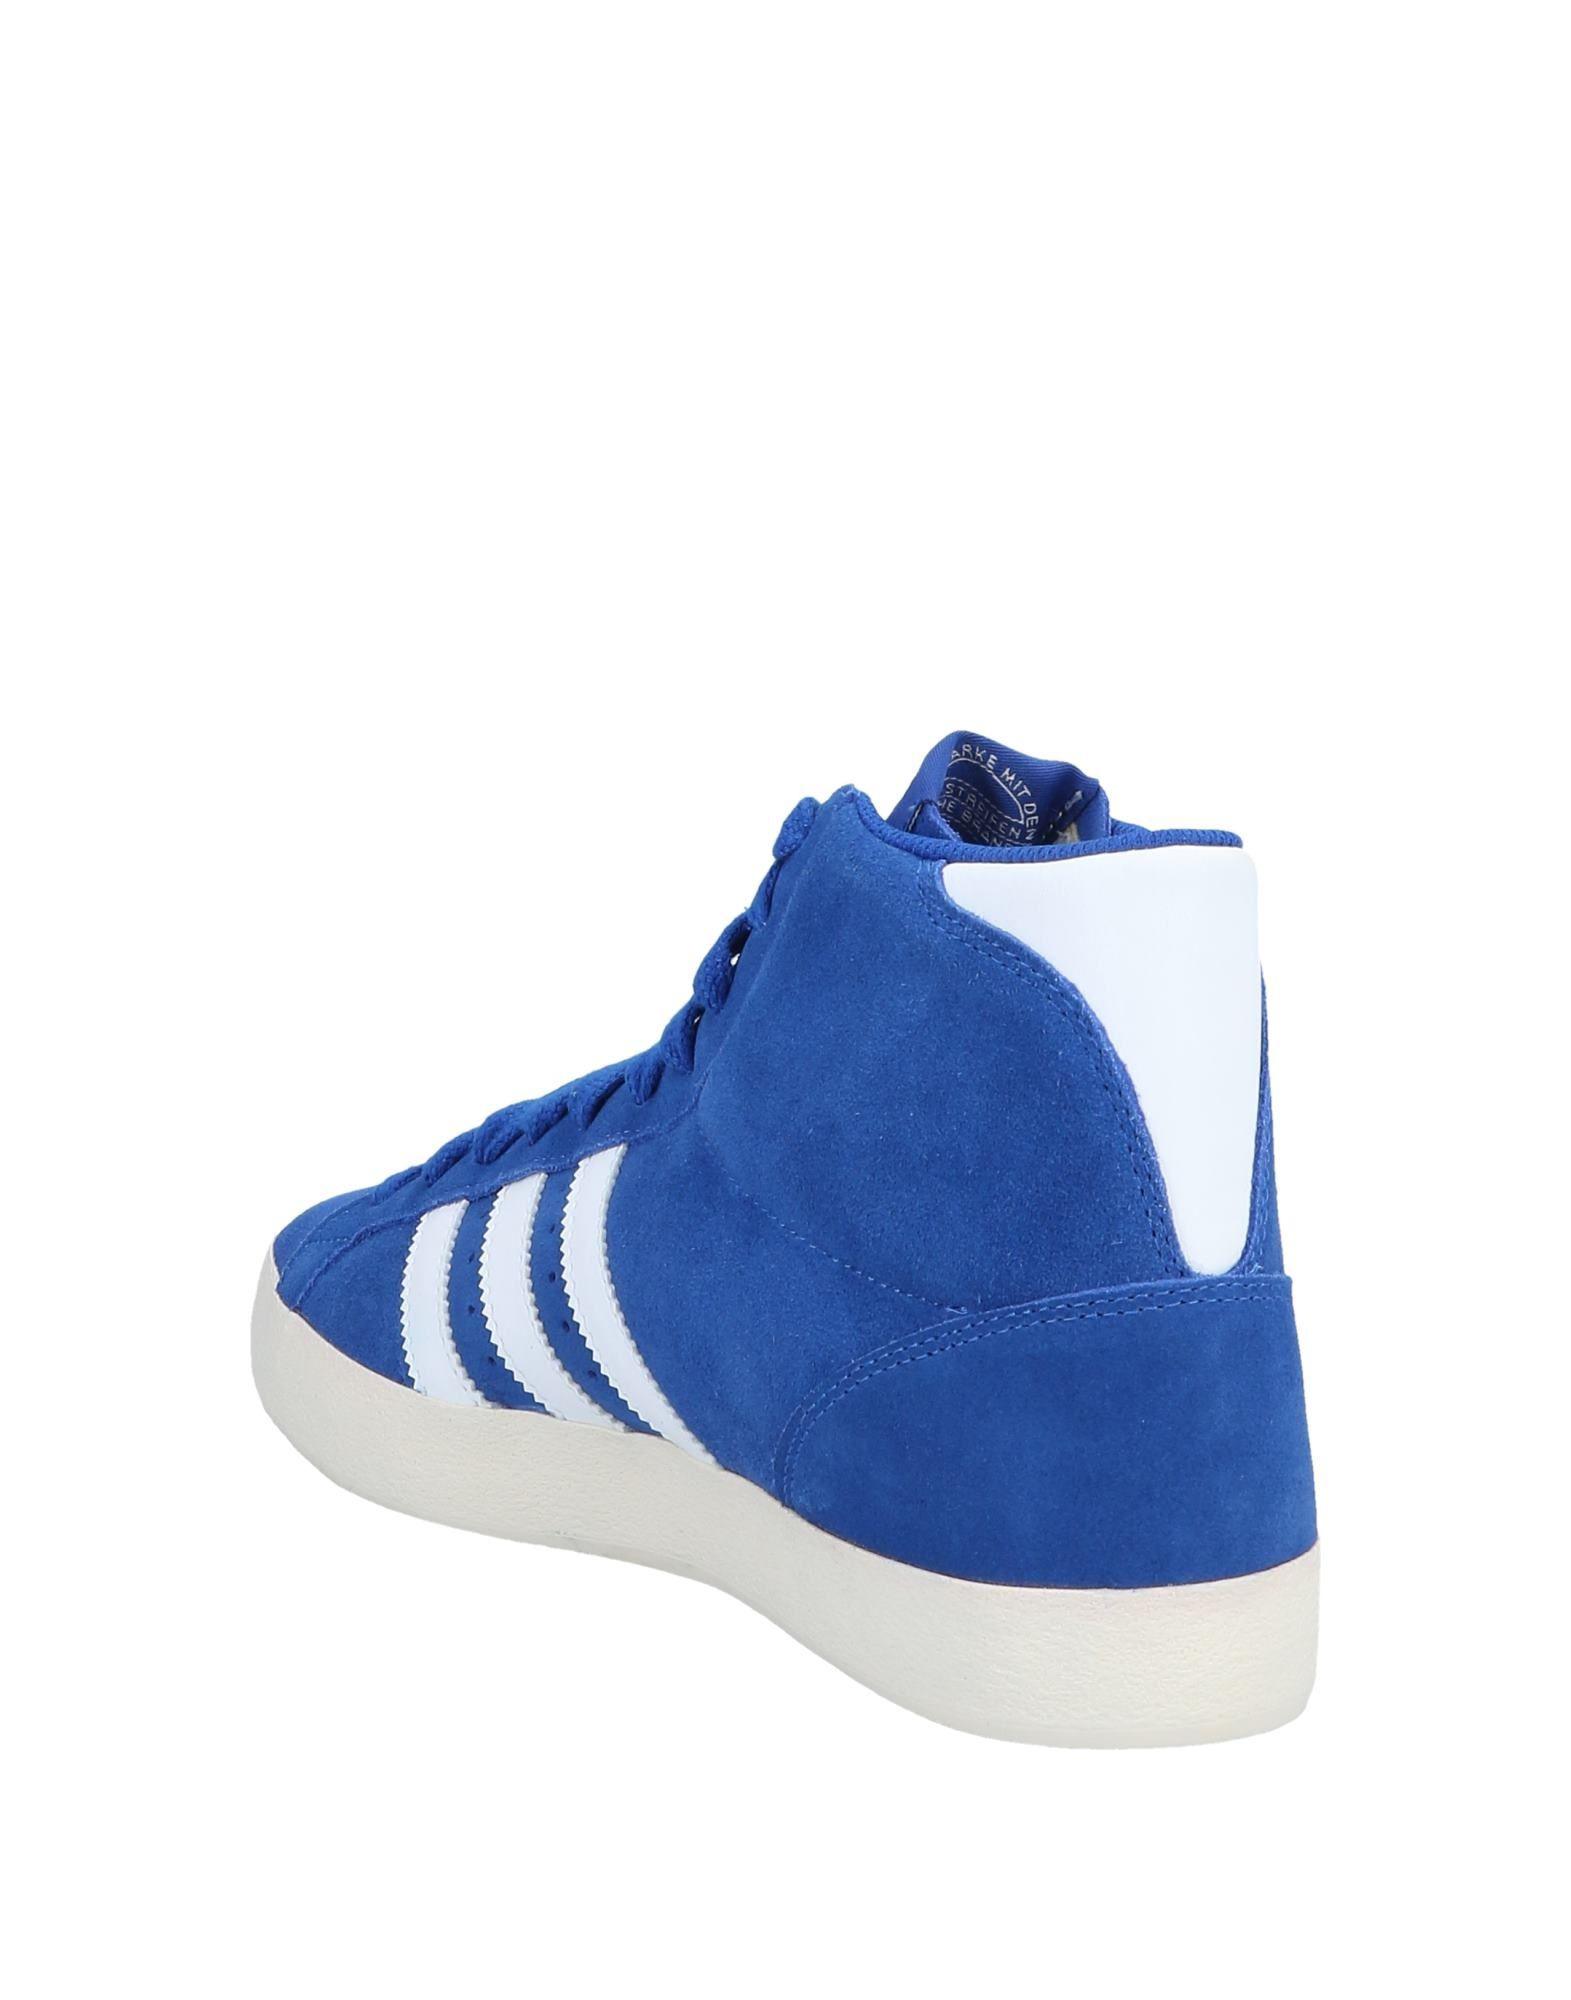 Buy Navy Blue Sports Shoes for Men by Adidas Originals Online | Ajio.com